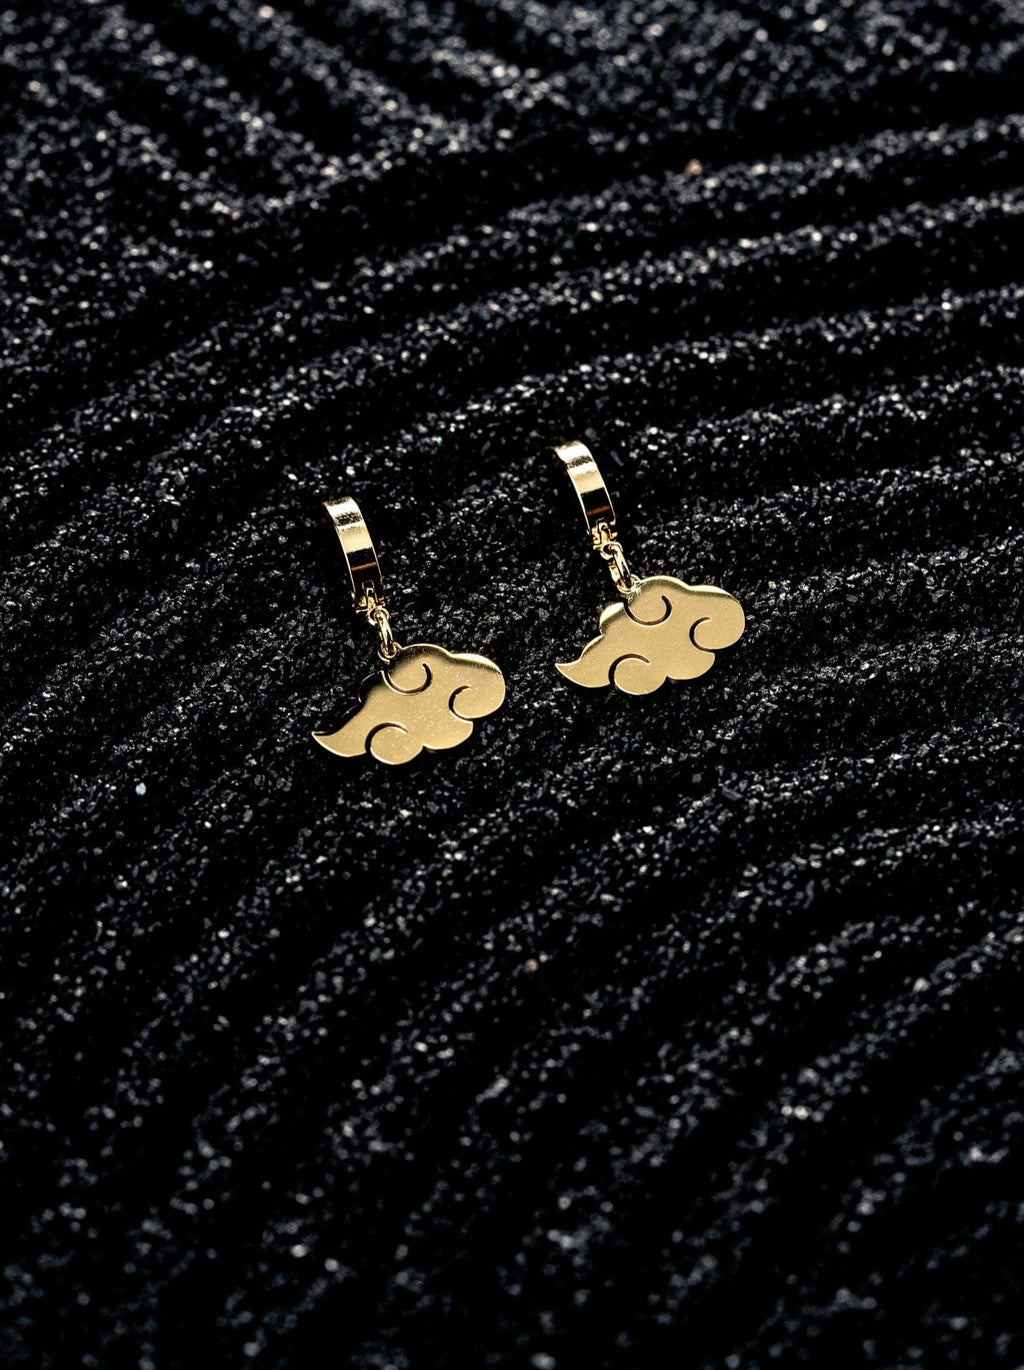 Naruto Akatsuki cloud earrings pendant